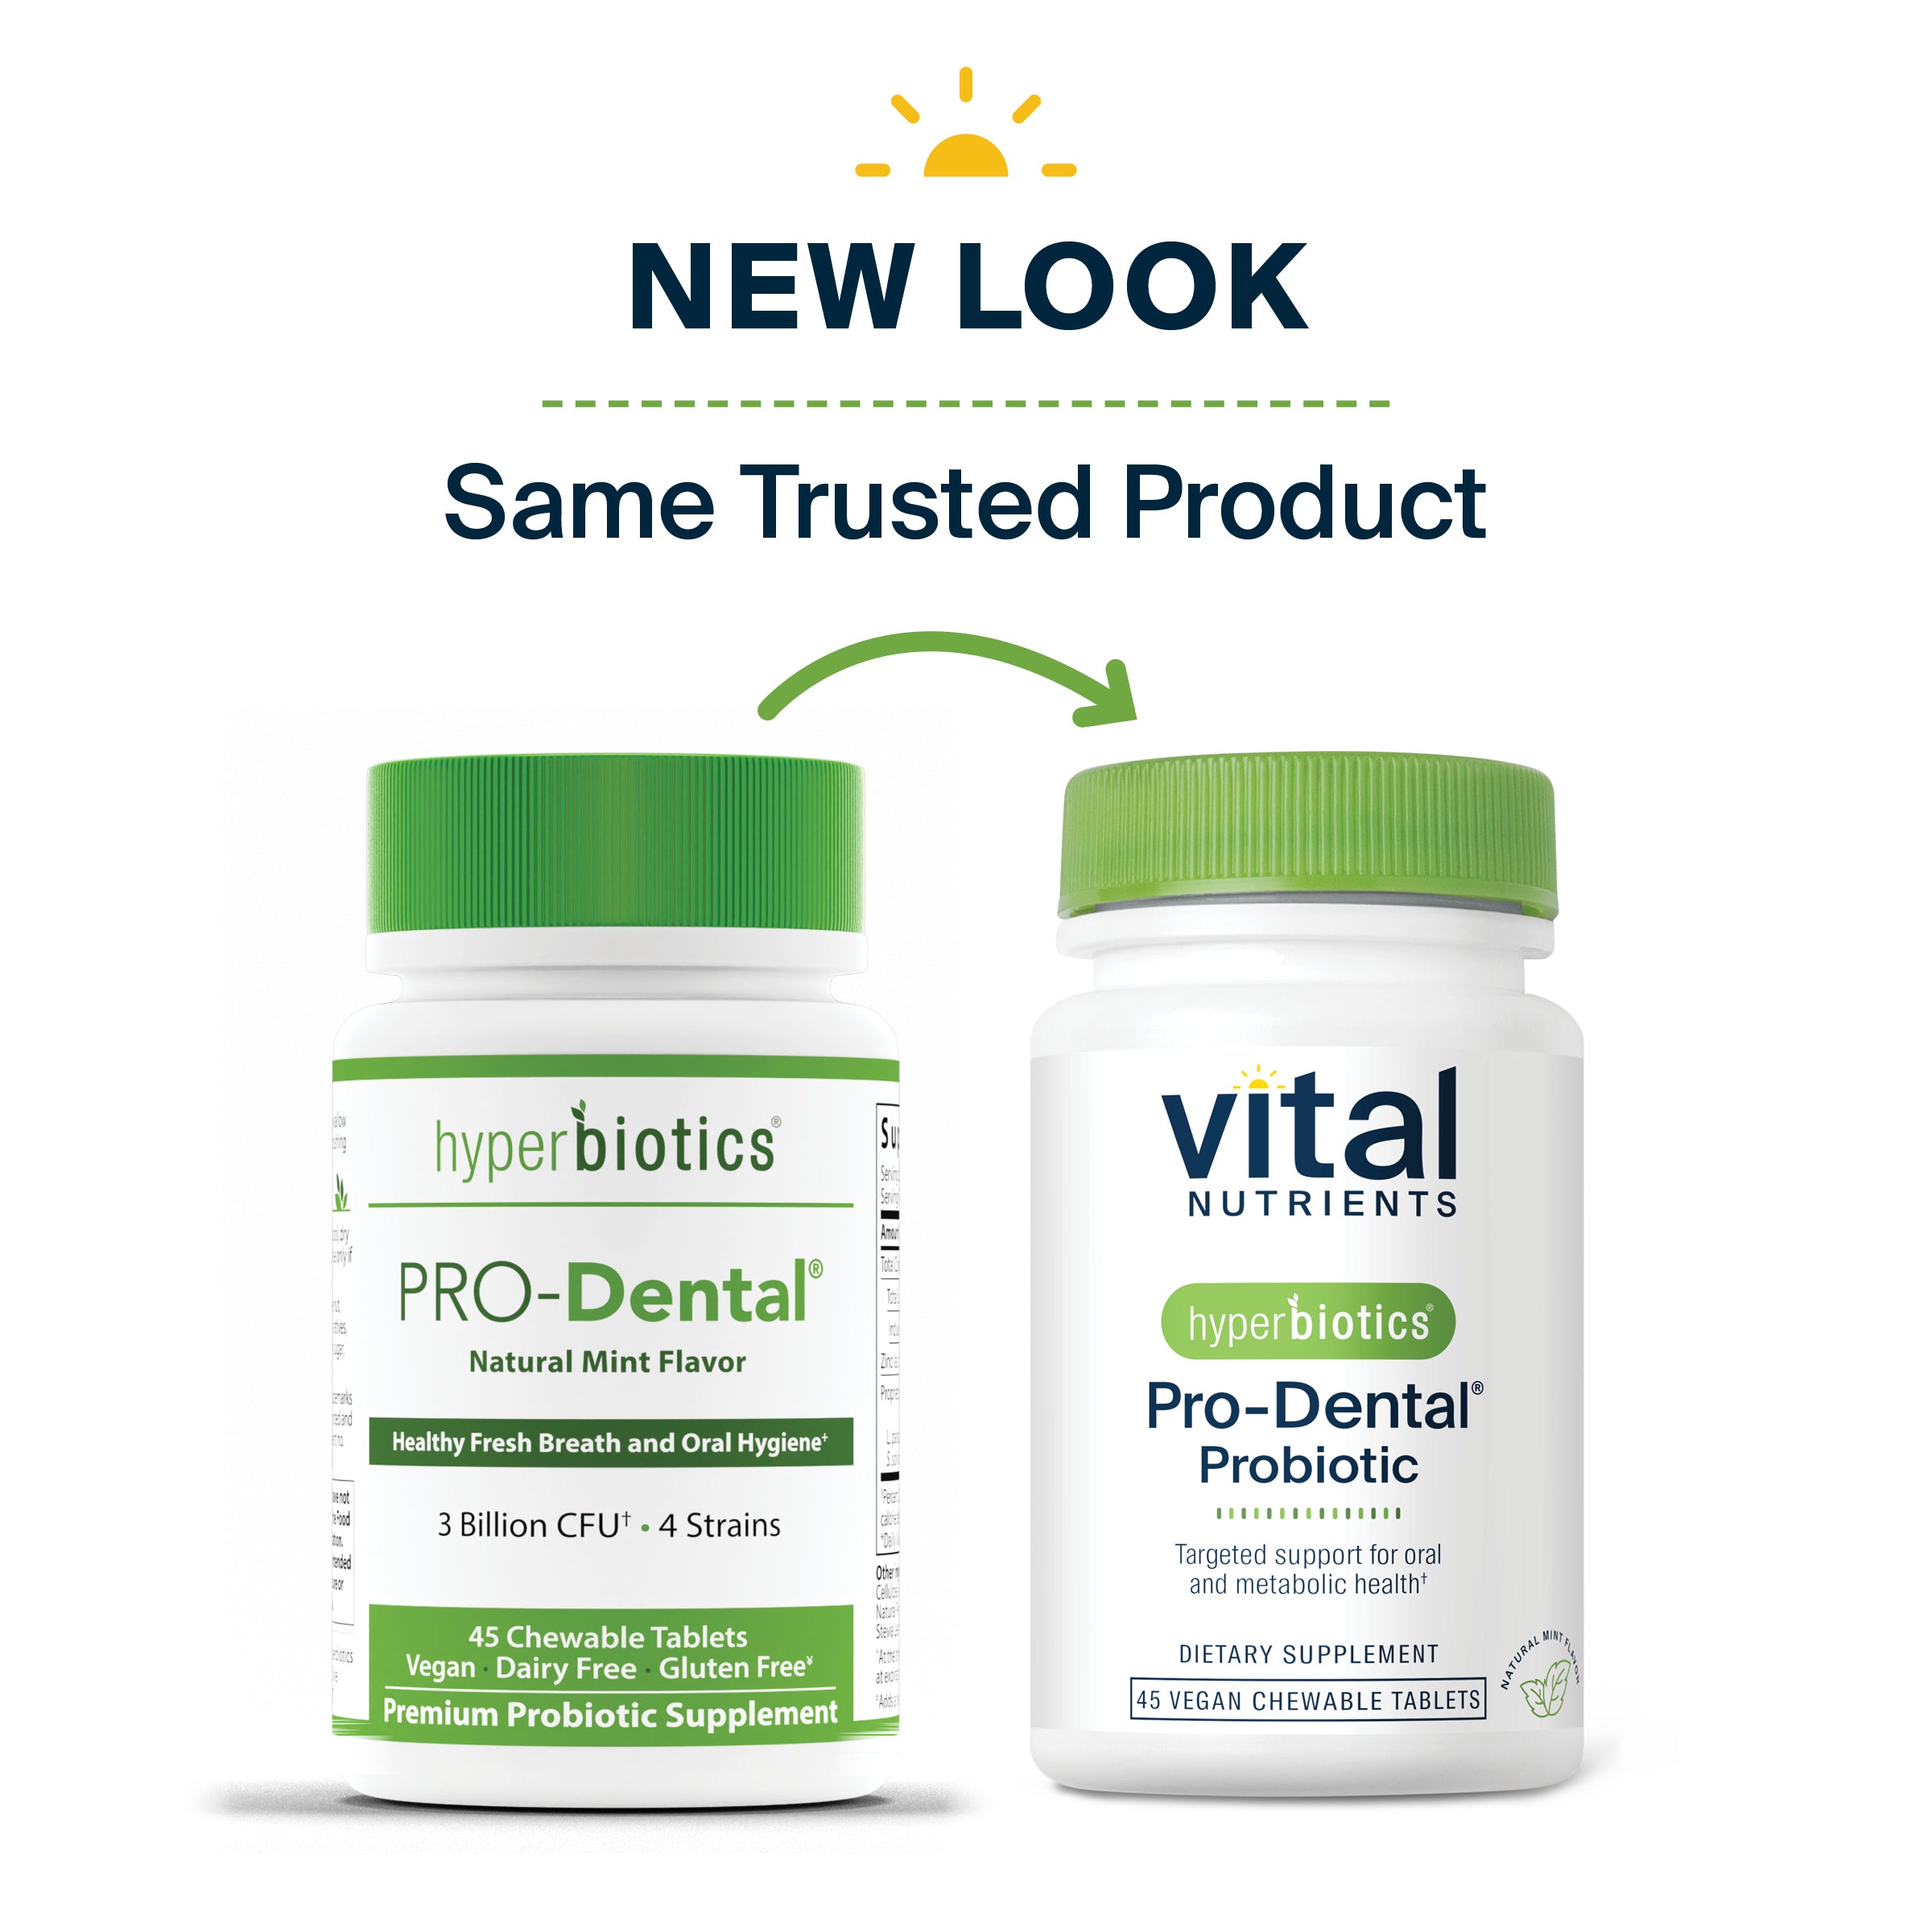 Hyperbiotics Pro-Dental Probiotic new look, same trusted product.